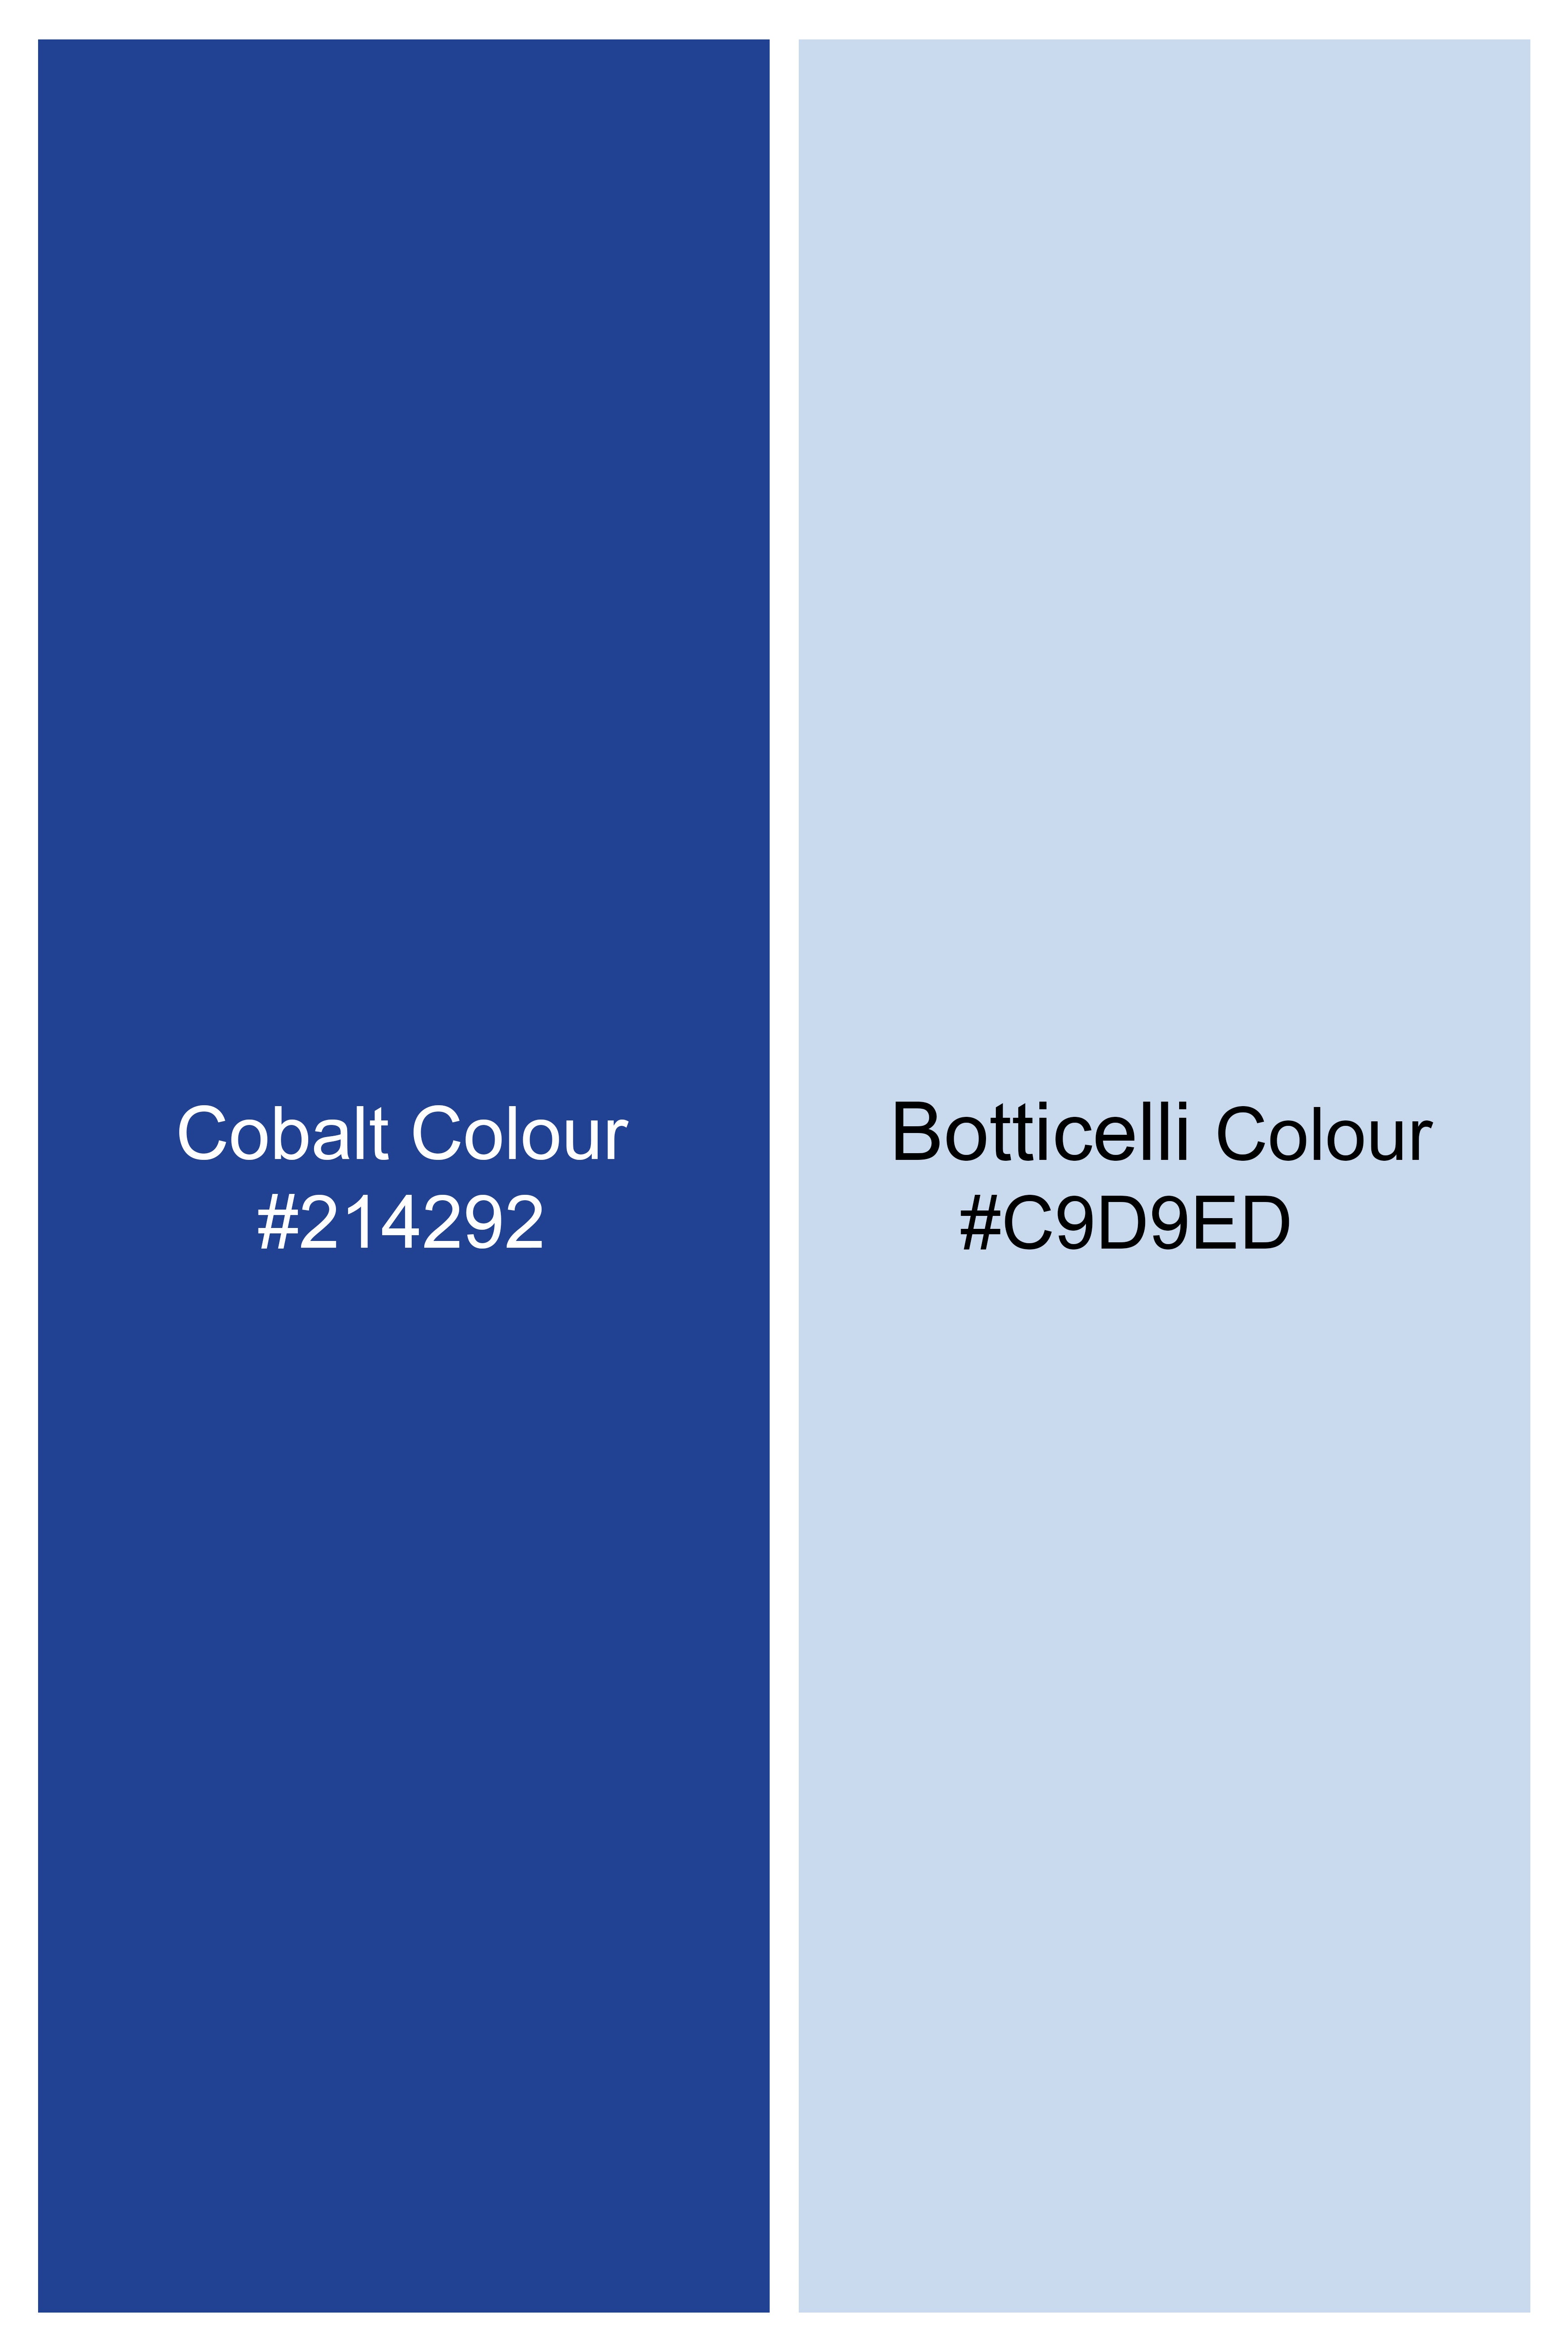 Cobalt Blue Checkered Wool Rich Double Breasted Blazer BL2947-DB-36, BL2947-DB-38, BL2947-DB-40, BL2947-DB-42, BL2947-DB-44, BL2947-DB-46, BL2947-DB-48, BL2947-DB-50, BL2947-DB-52, BL2947-DB-54, BL2947-DB-56, BL2947-DB-58, BL2947-DB-60